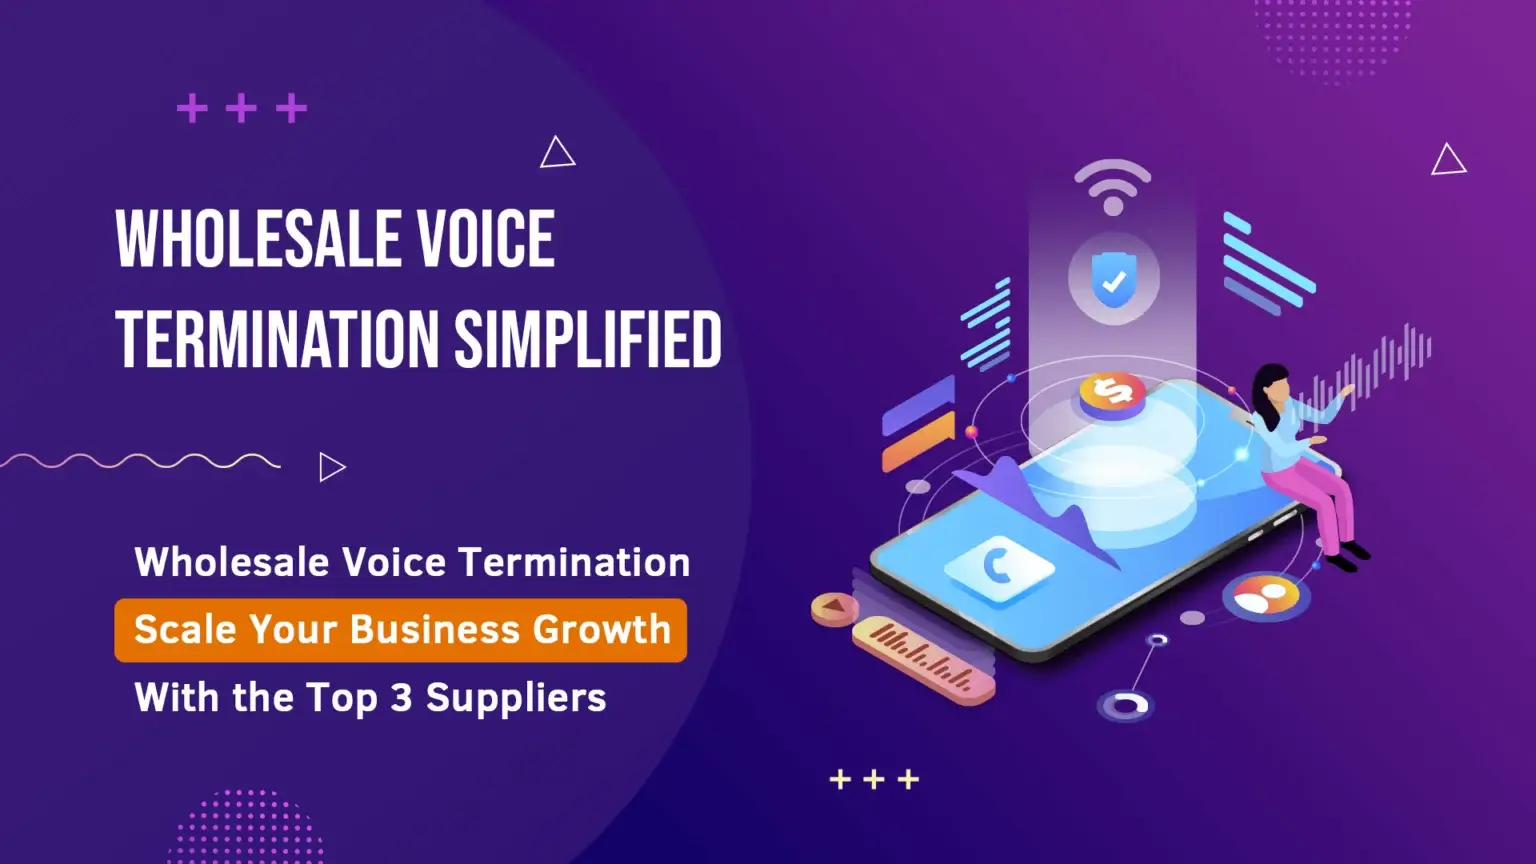 Wholesale Voice Termination simplified